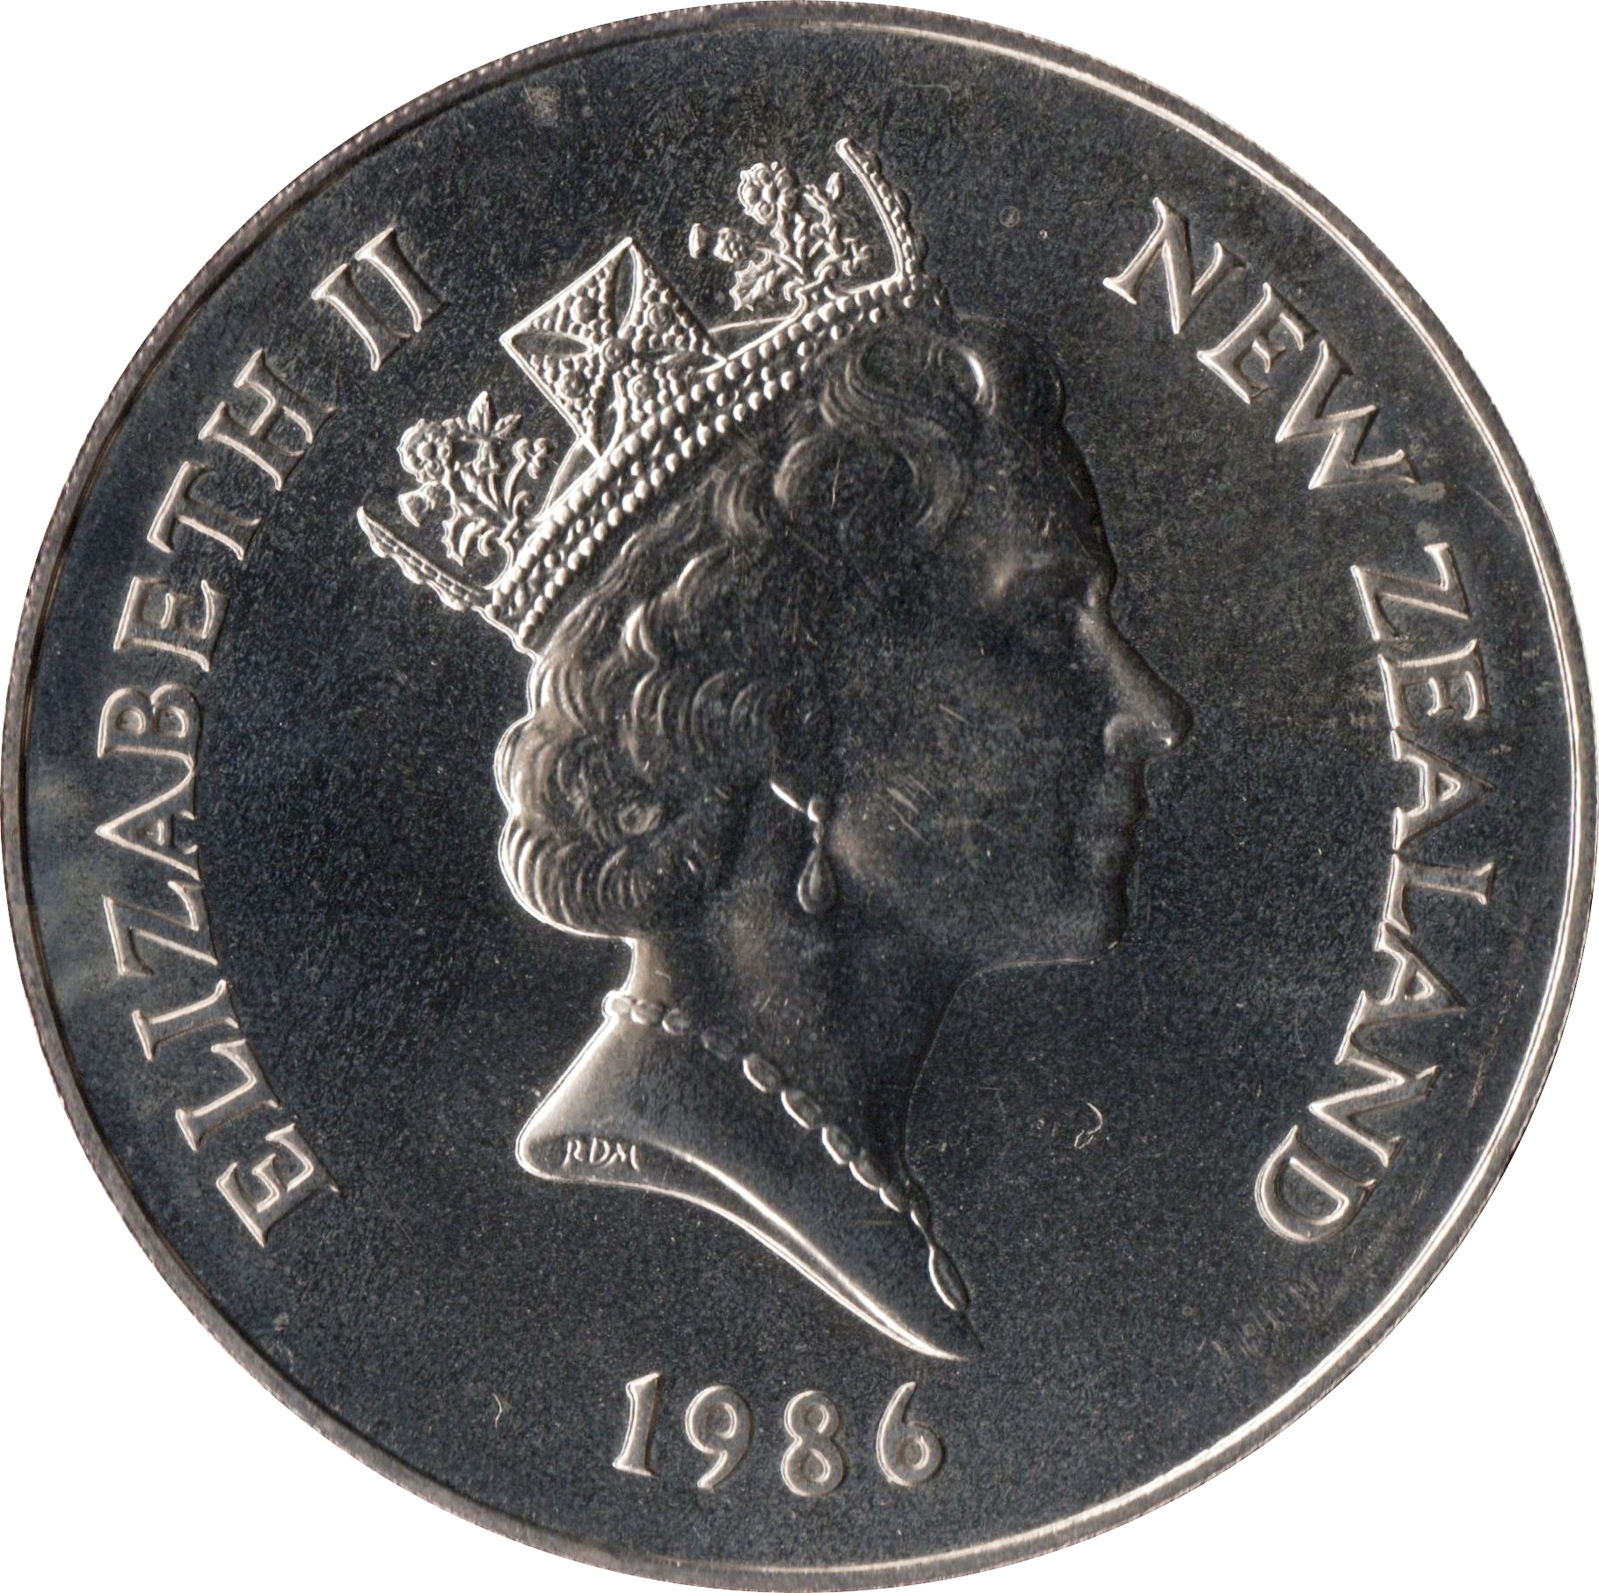 1986 $1 Royal Visit Uncirculated Coin in Capsule